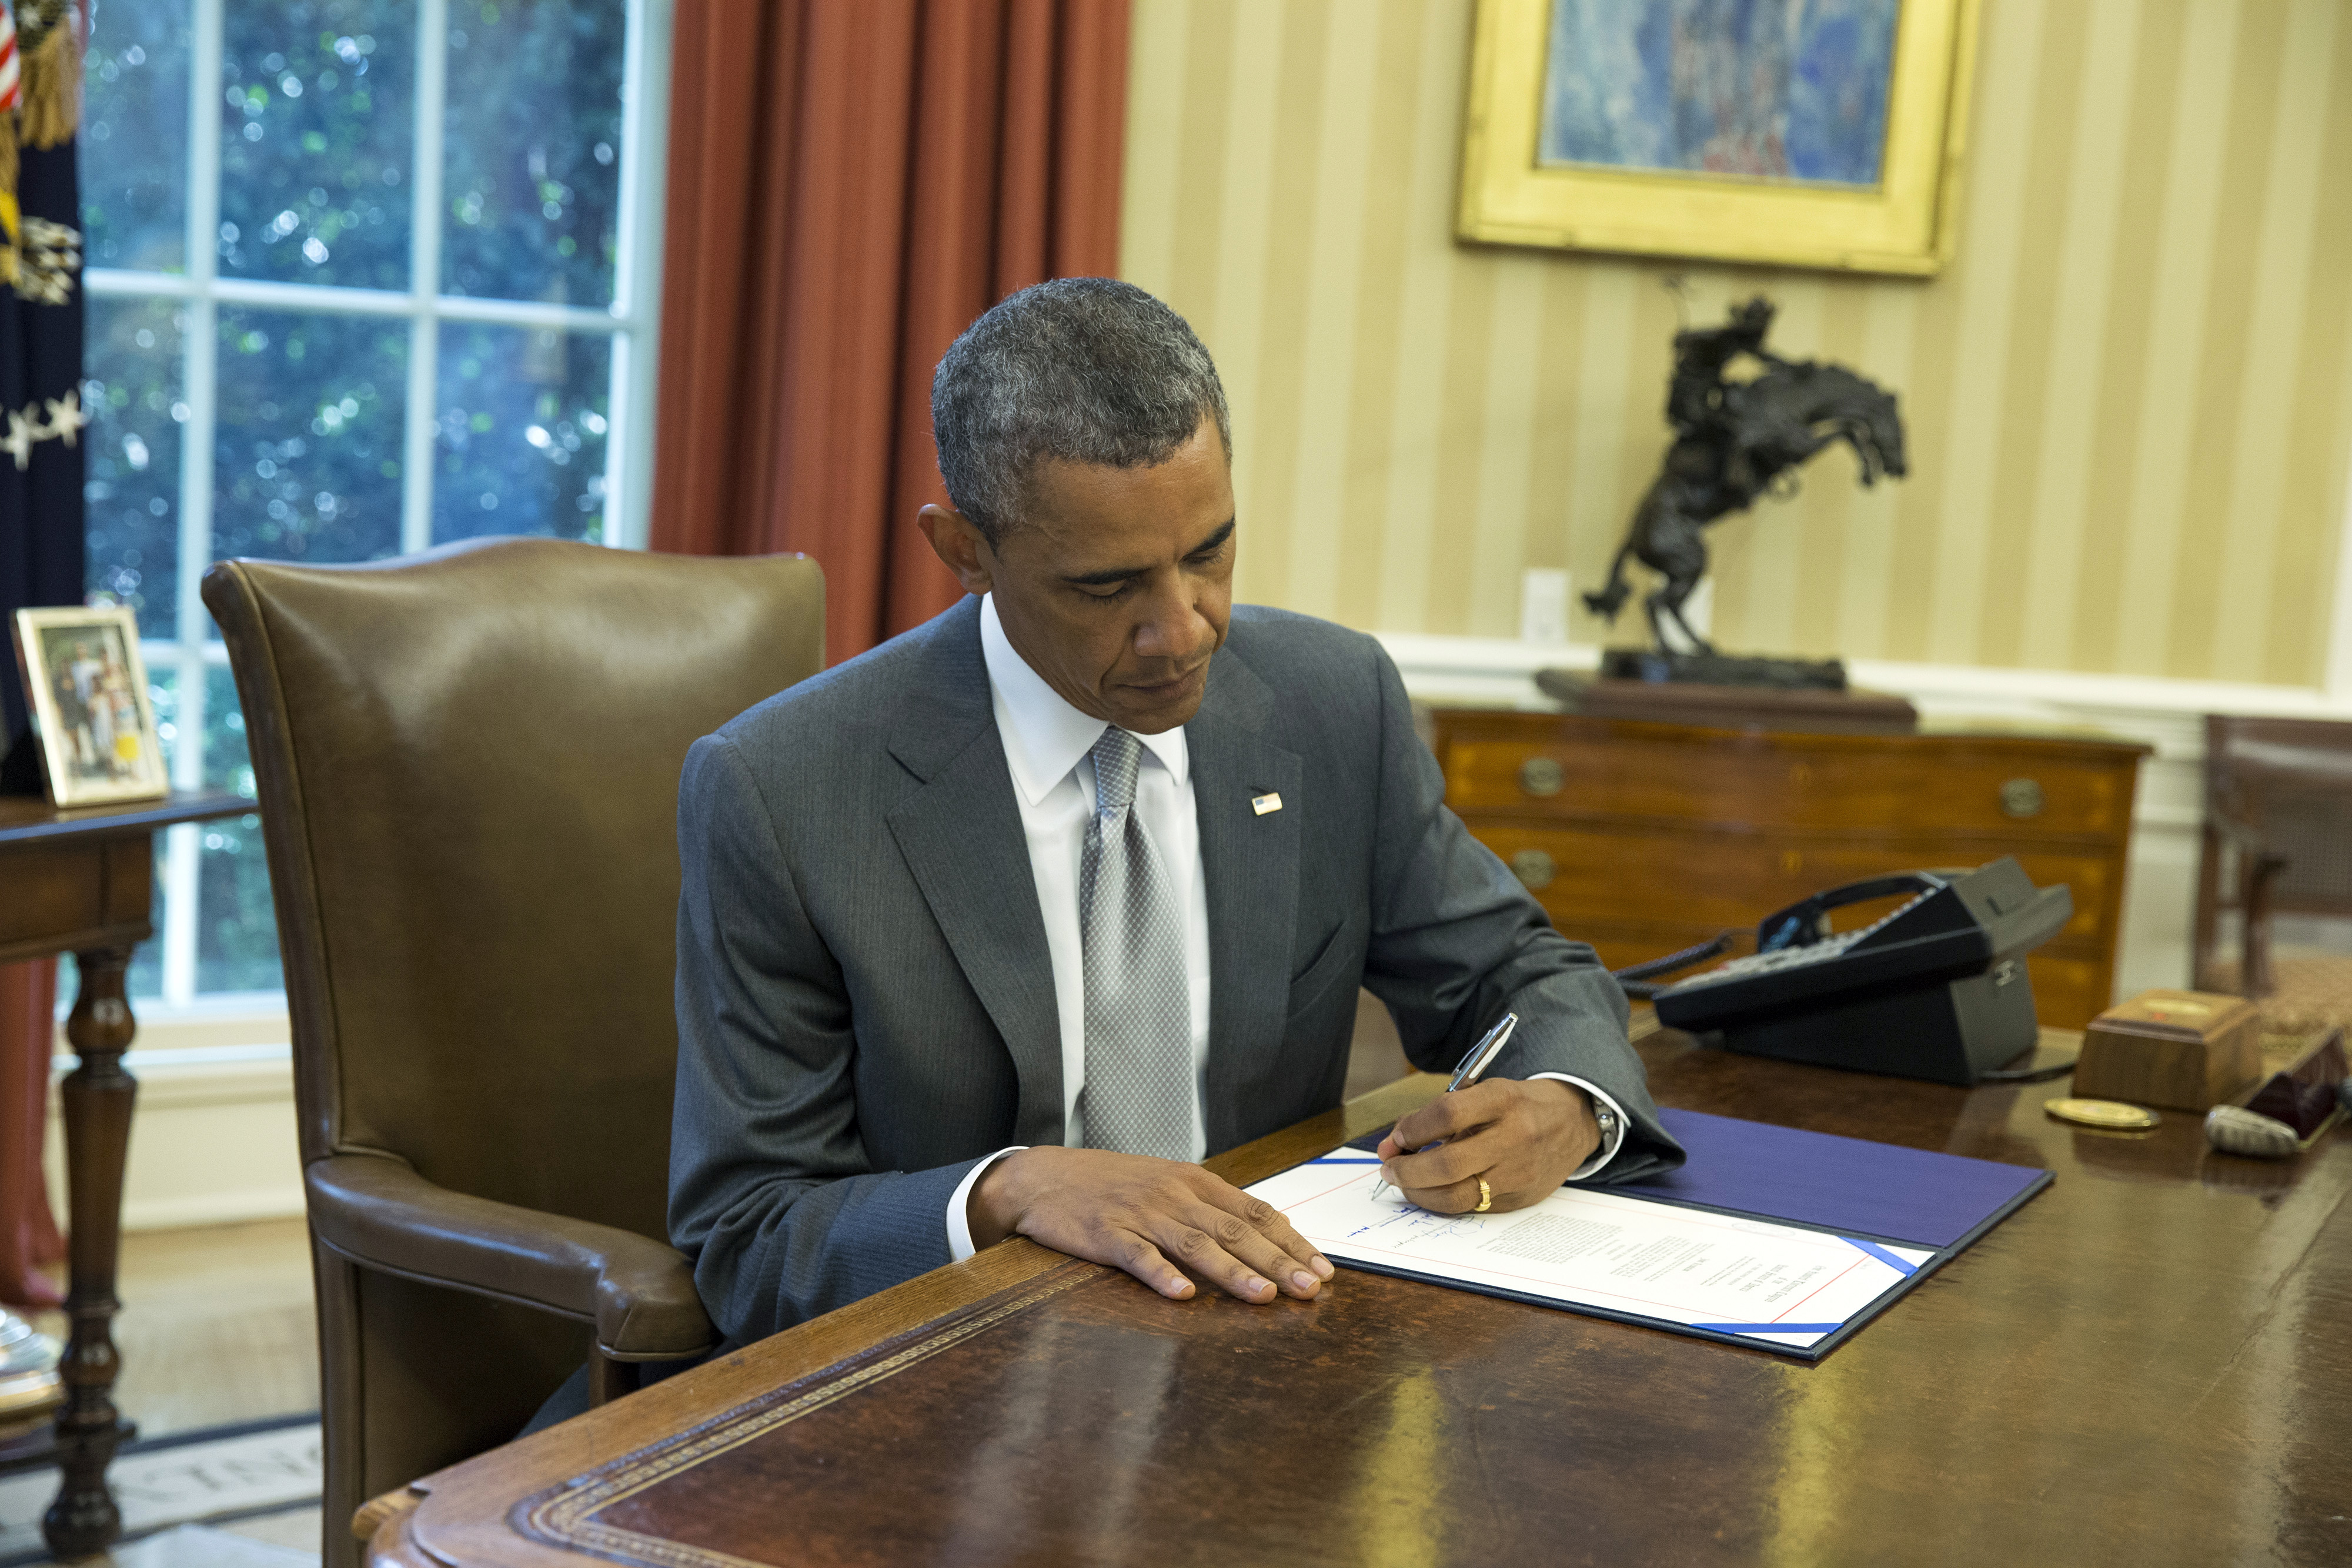 President Barack Obama signs 